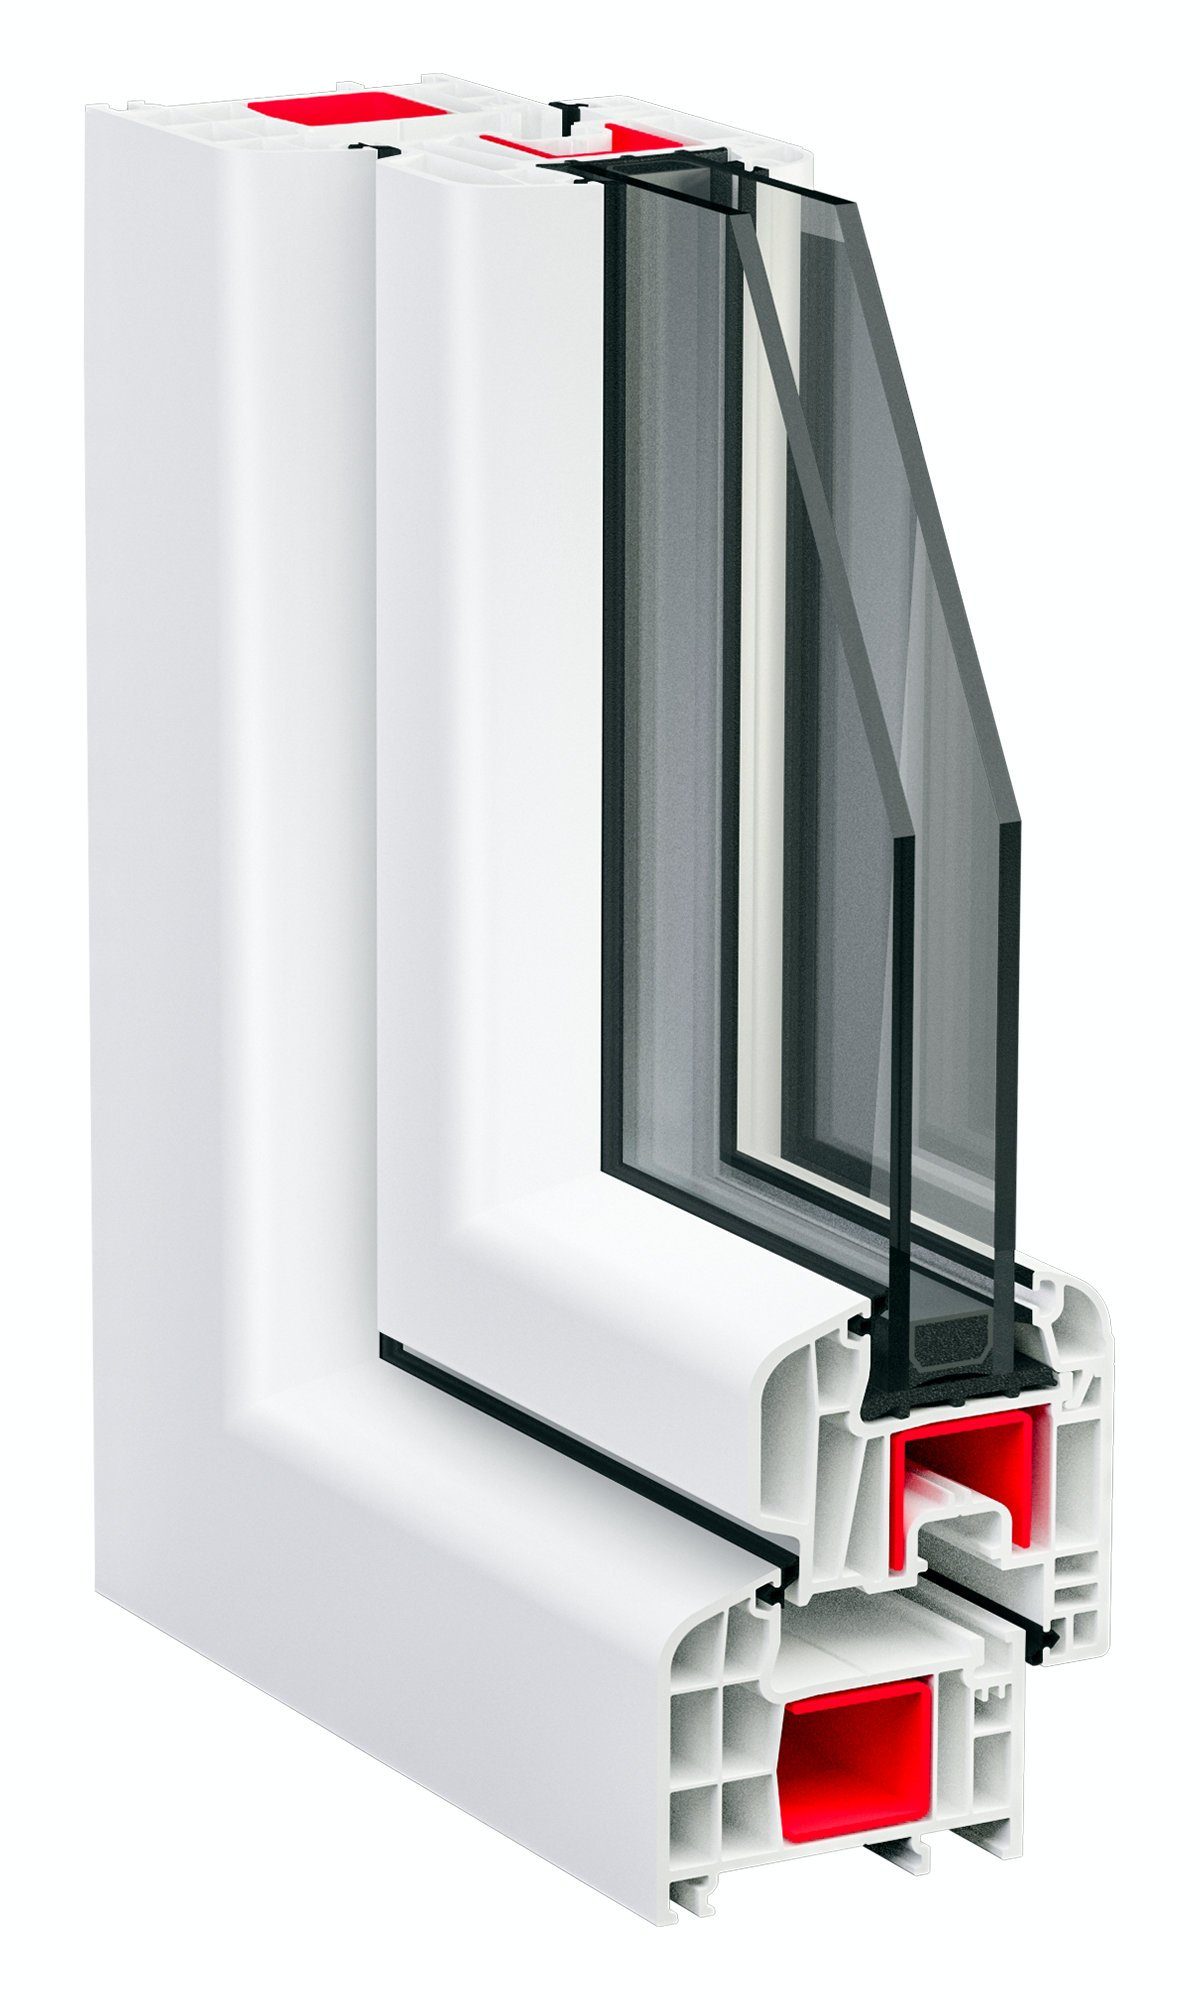 1000x800 Kellerfenster Verglasung RC2 weiß 5-Kammer-Profil (Set), Flügel 70 Profil, Dreh-Kipp 2-fach 1 DECO mm Sicherheitsbeschlag, GROUP SN Hochwertiges